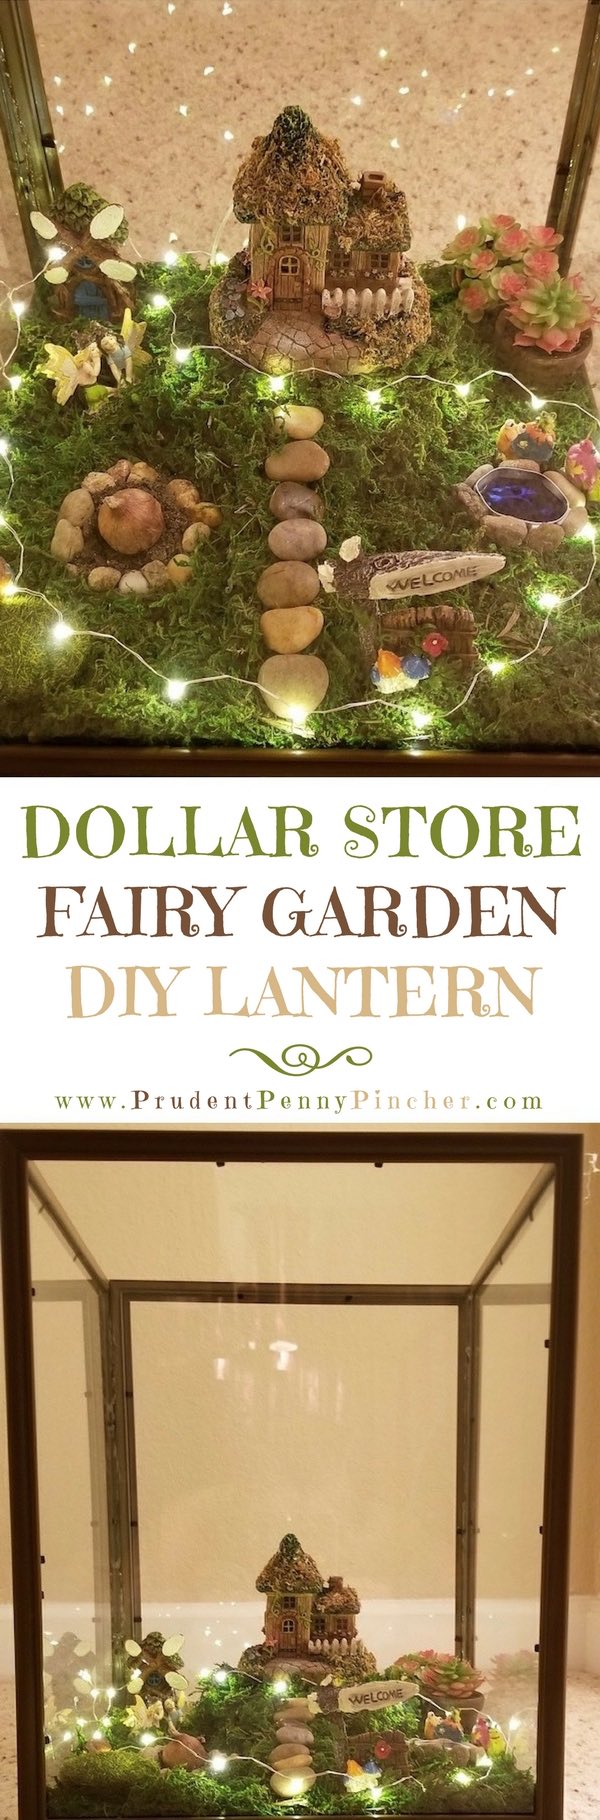 garden fairy dollar diy lantern prudentpennypincher links purchases affiliate commissions receive through